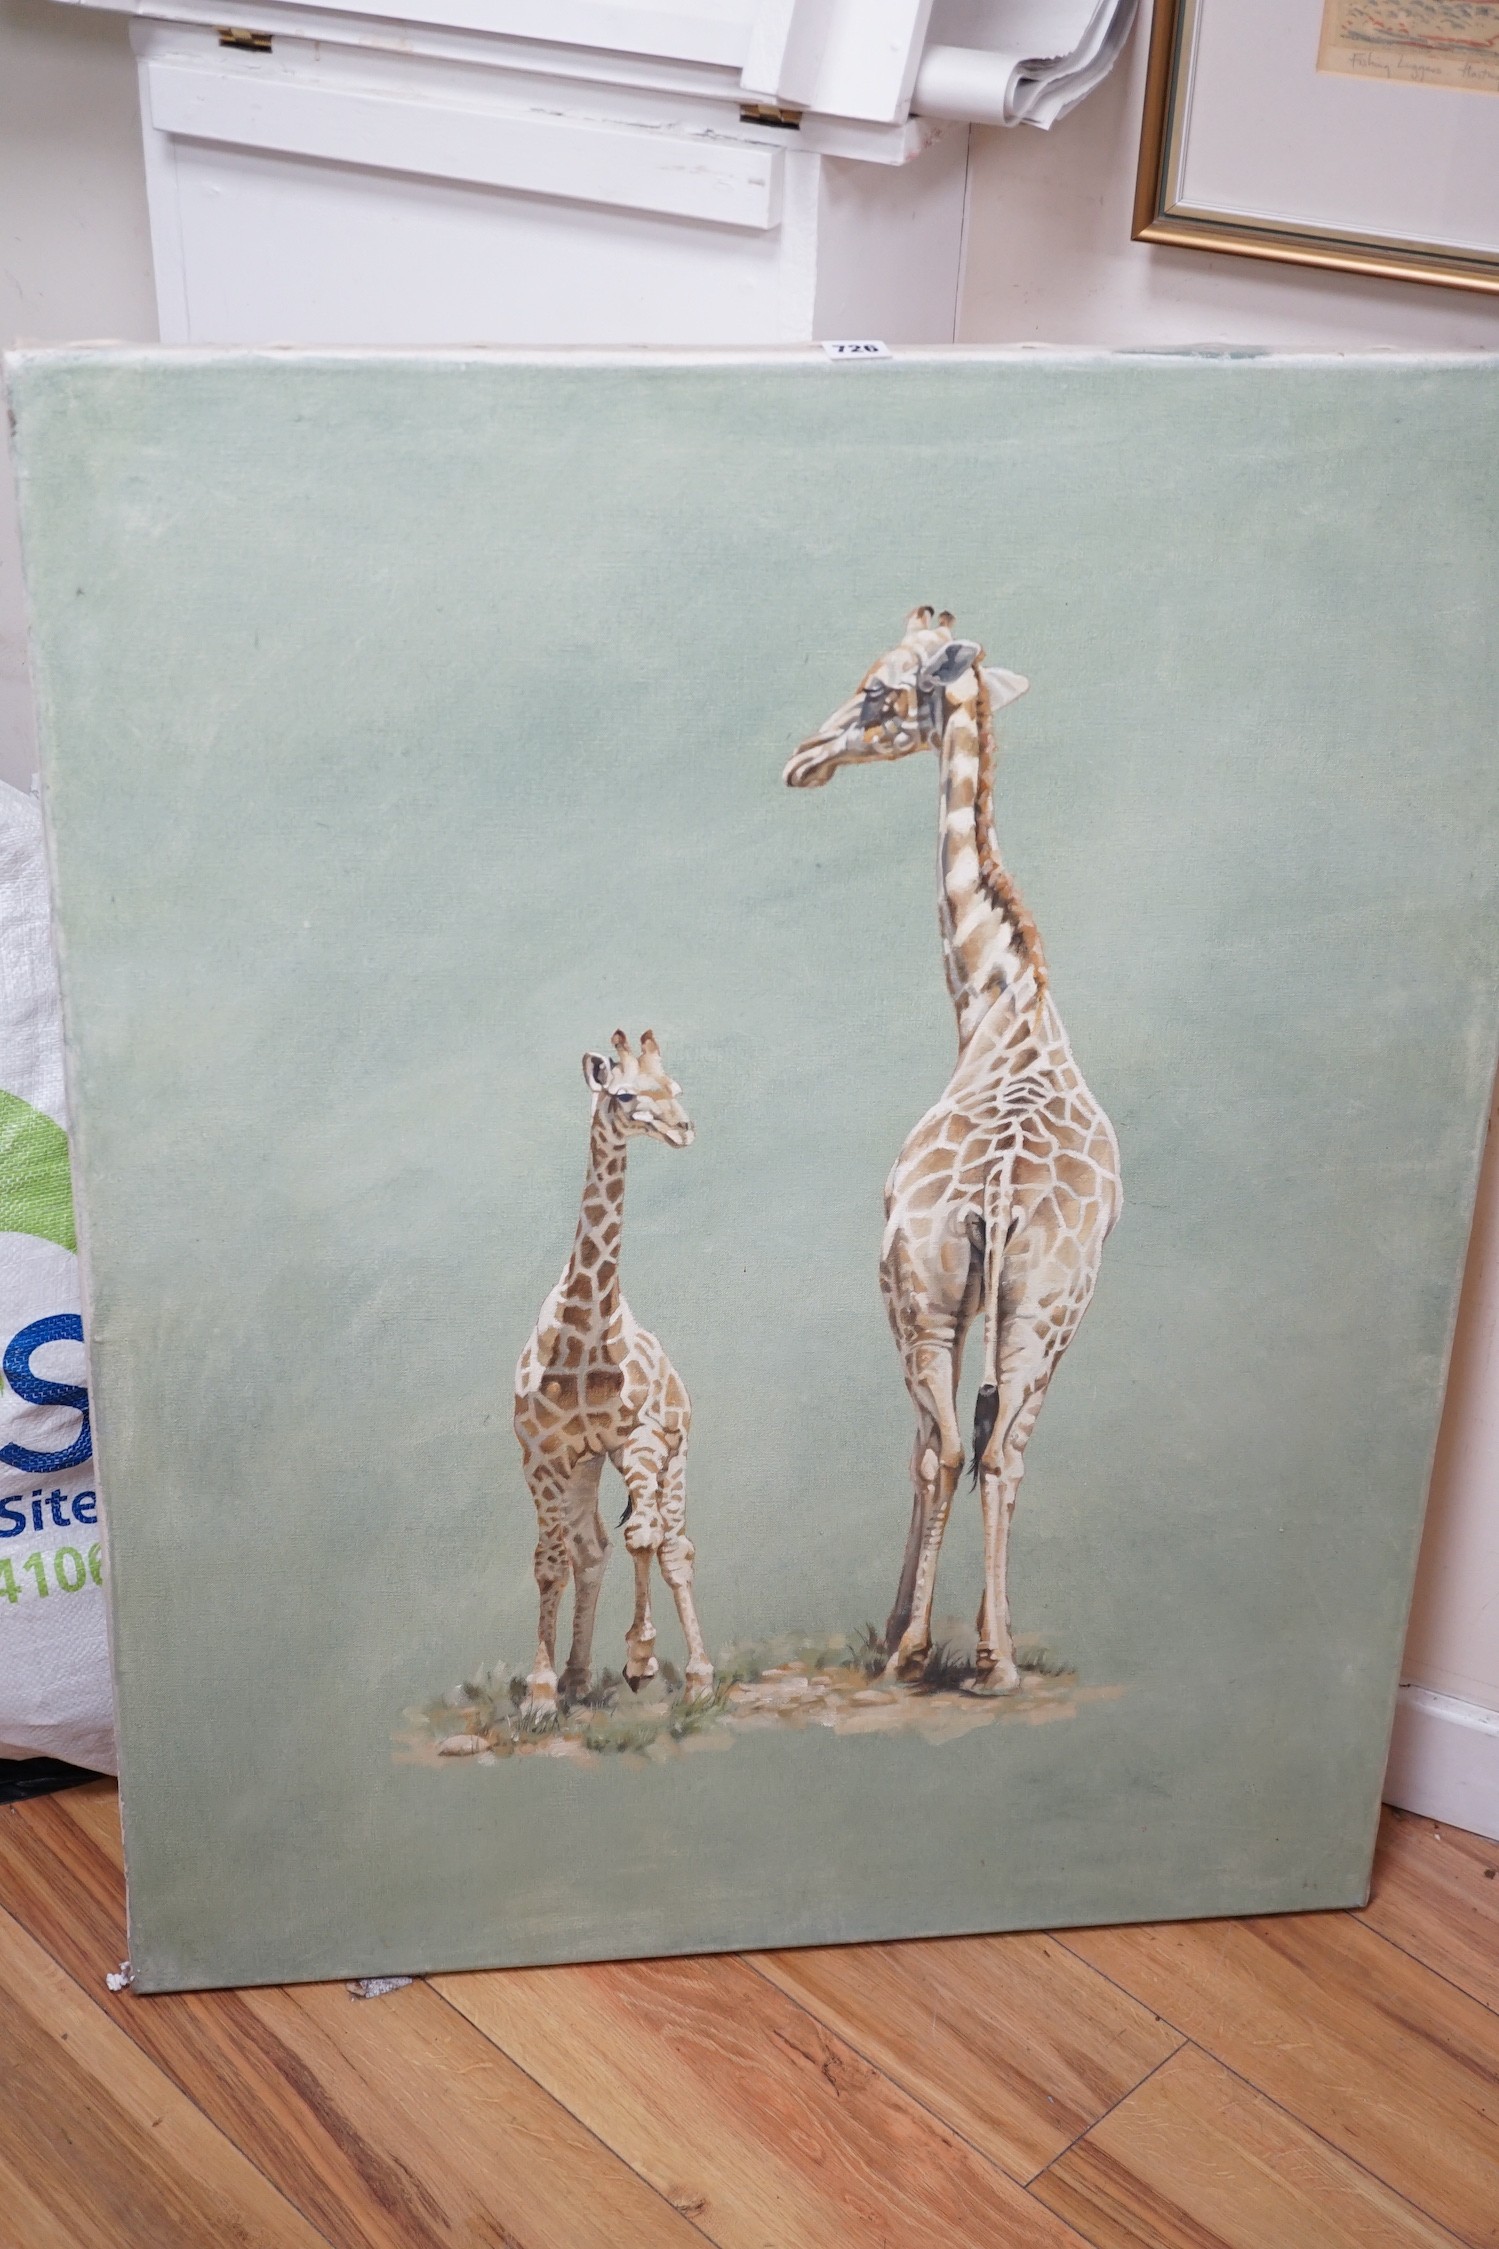 After David Shepherd, oil on canvas, Two giraffes, 99 x 79cm, unframed